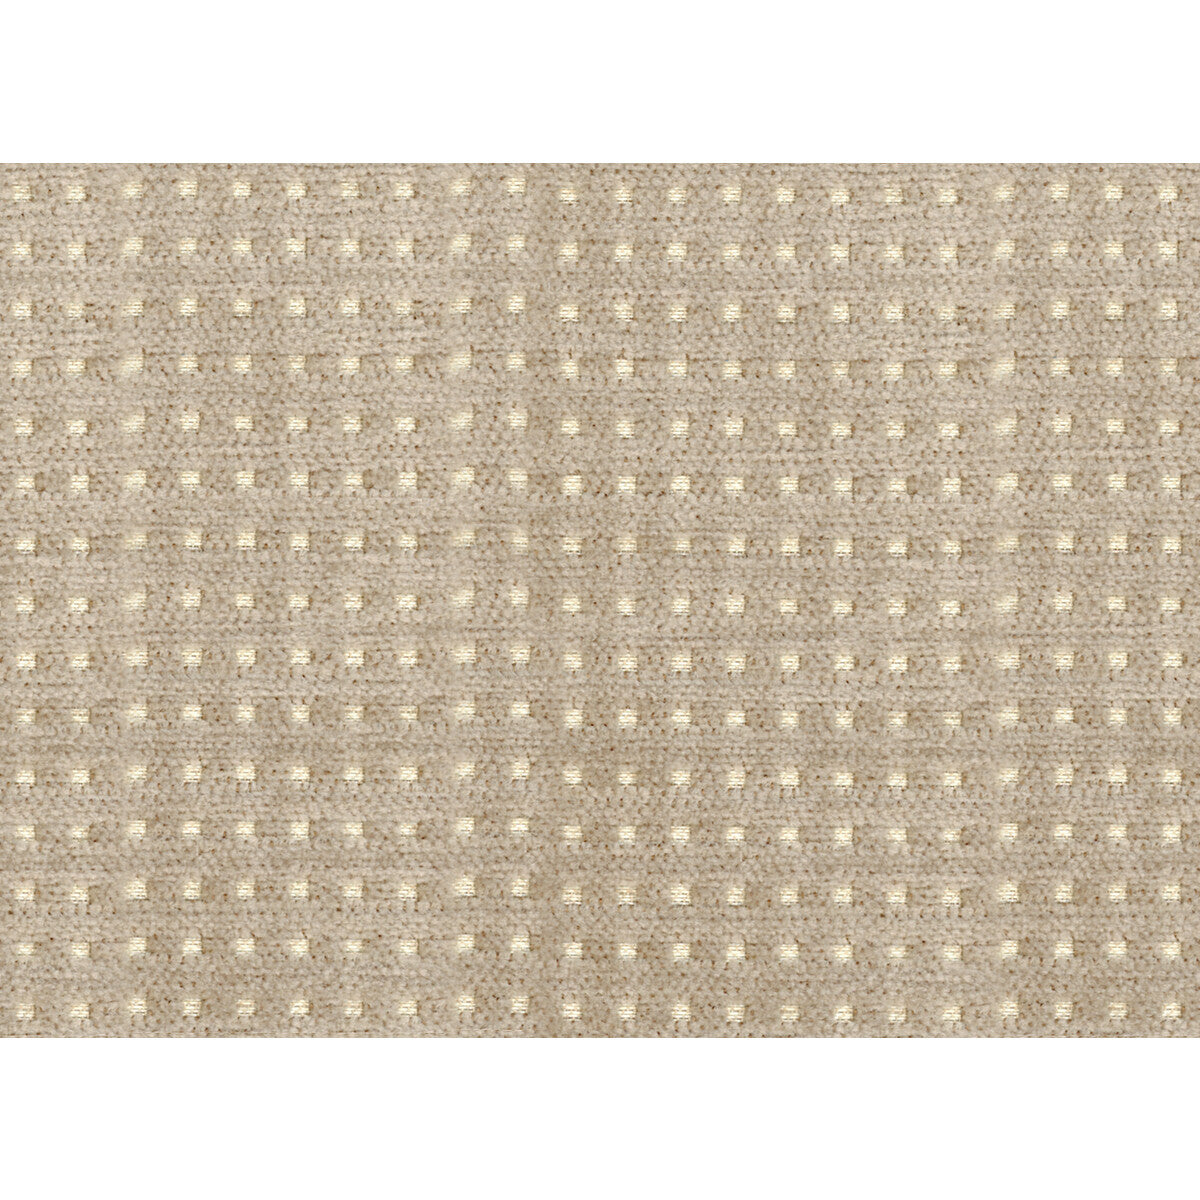 Kravet Smart fabric in 34356-106 color - pattern 34356.106.0 - by Kravet Smart